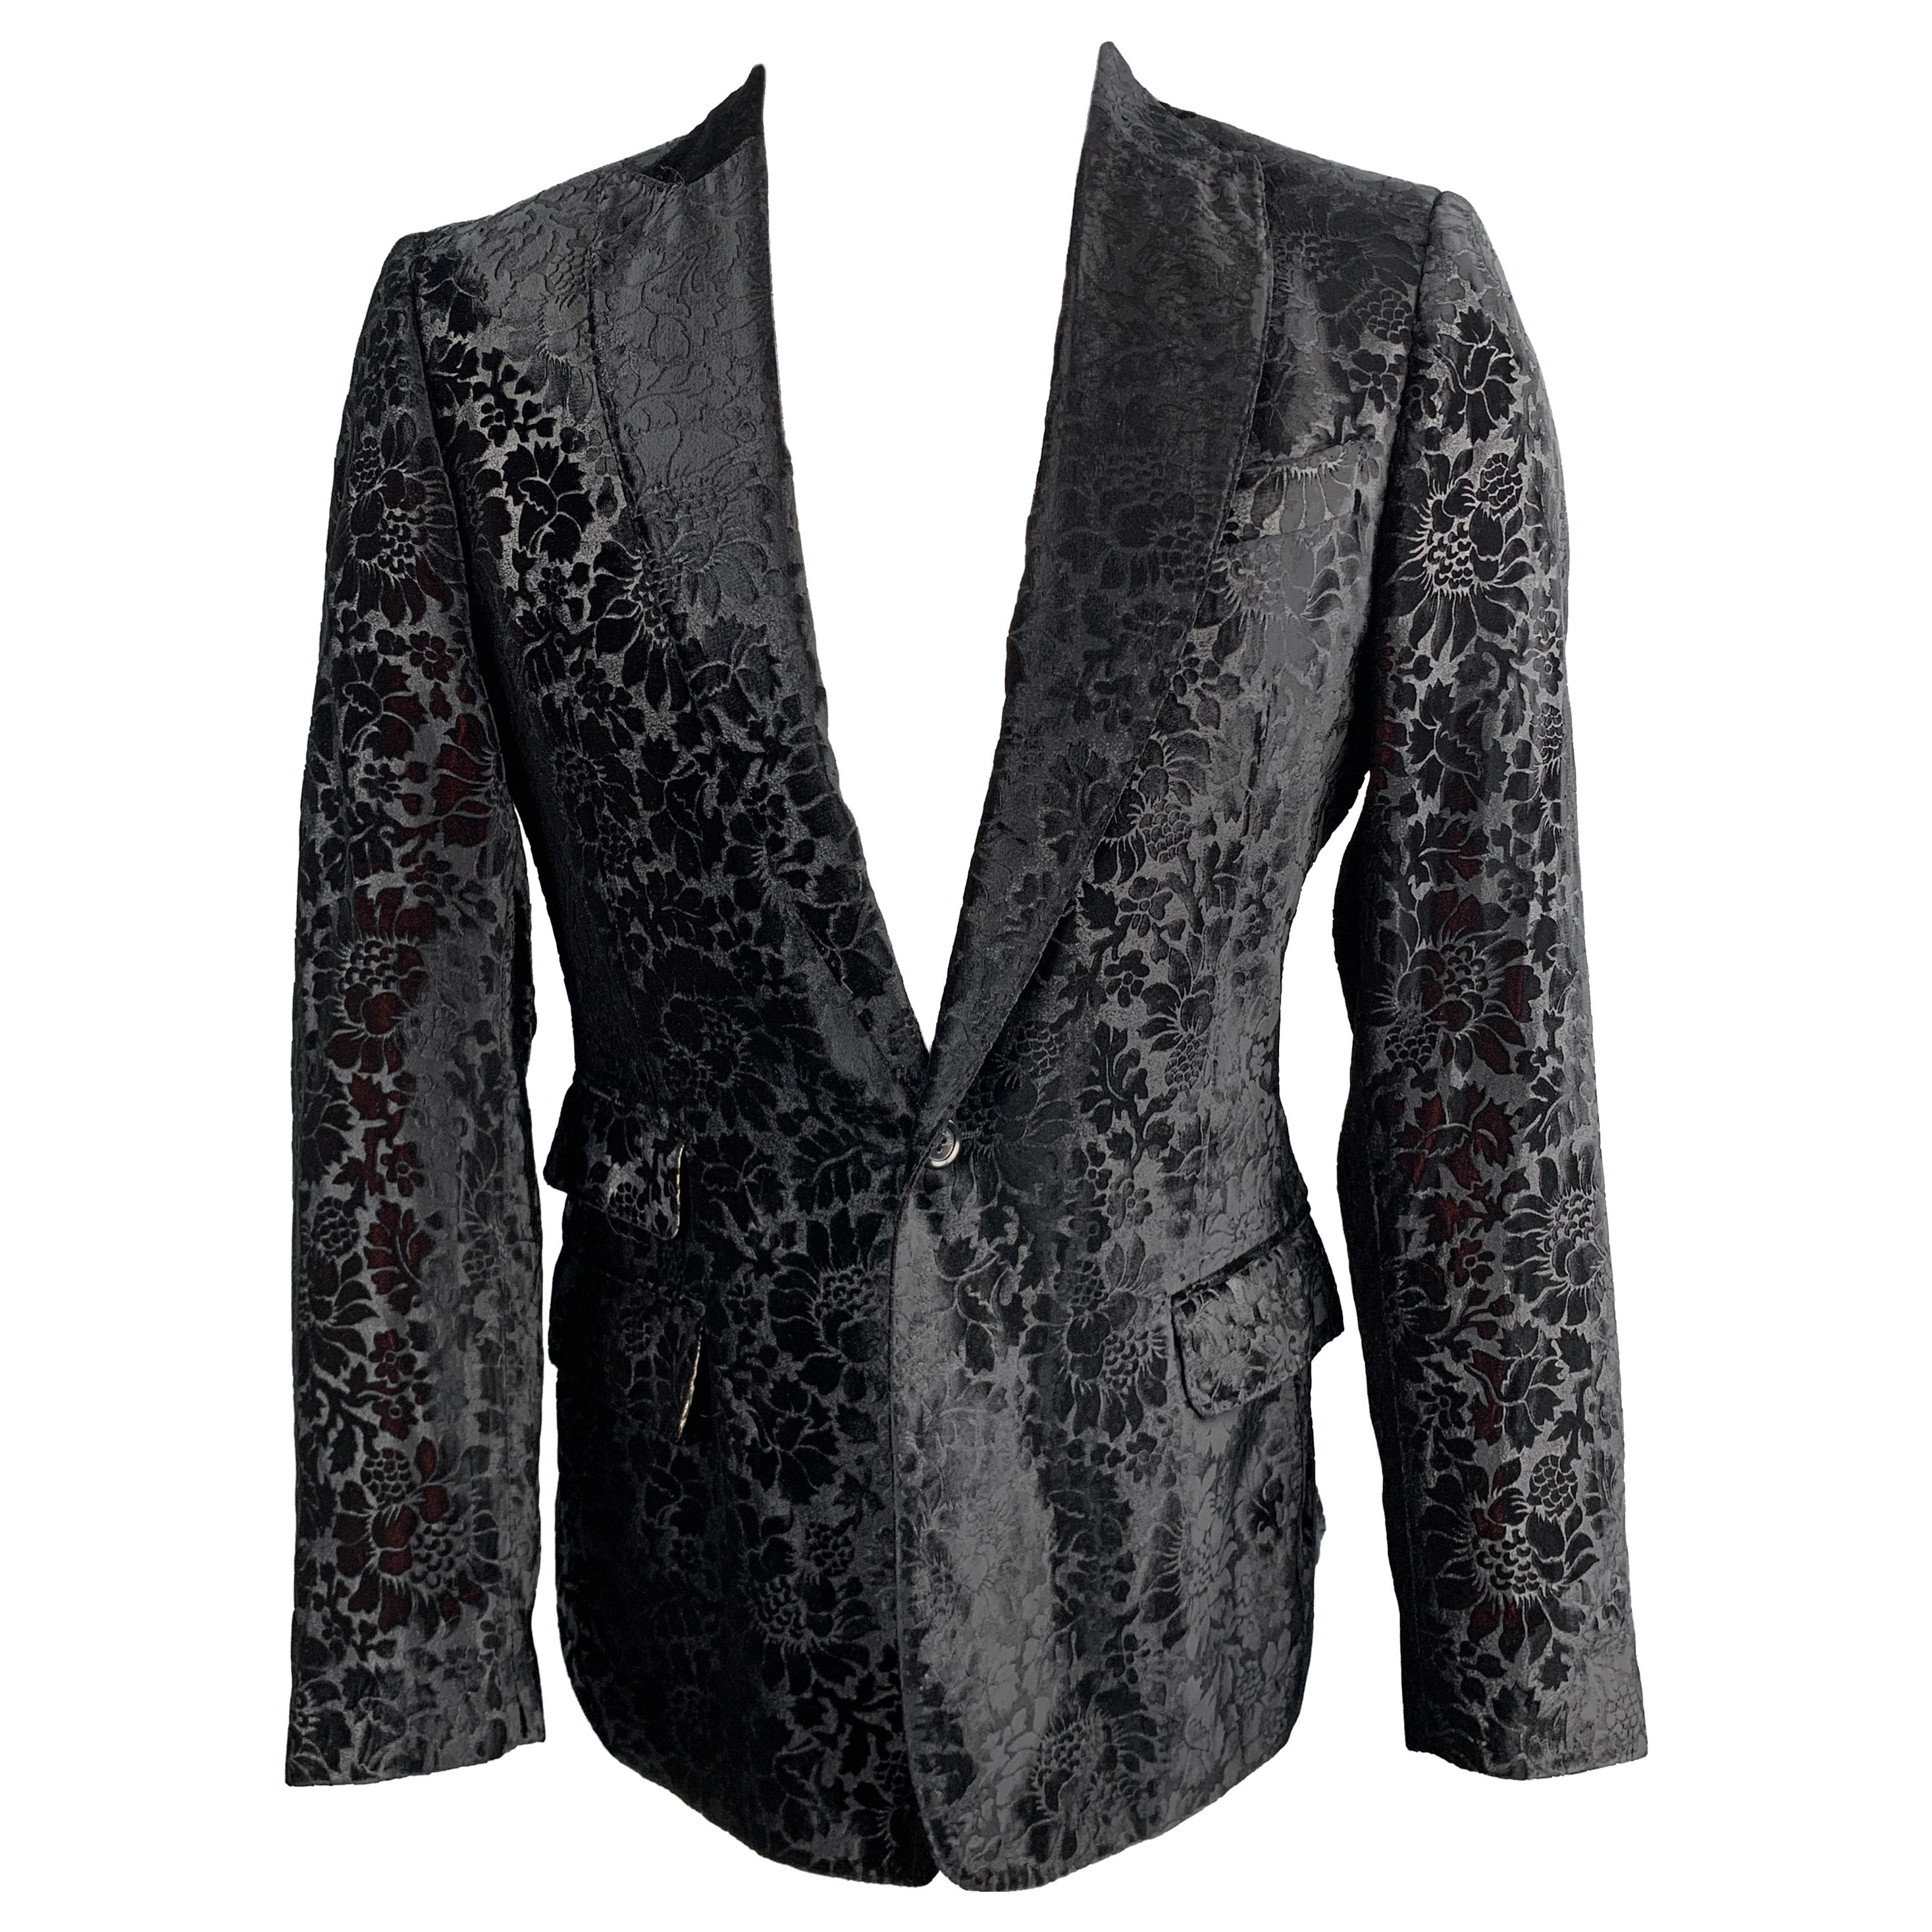 JUST CAVALLI Size 40 Black & Burgundy Floral Virgin Wool Sport Coat